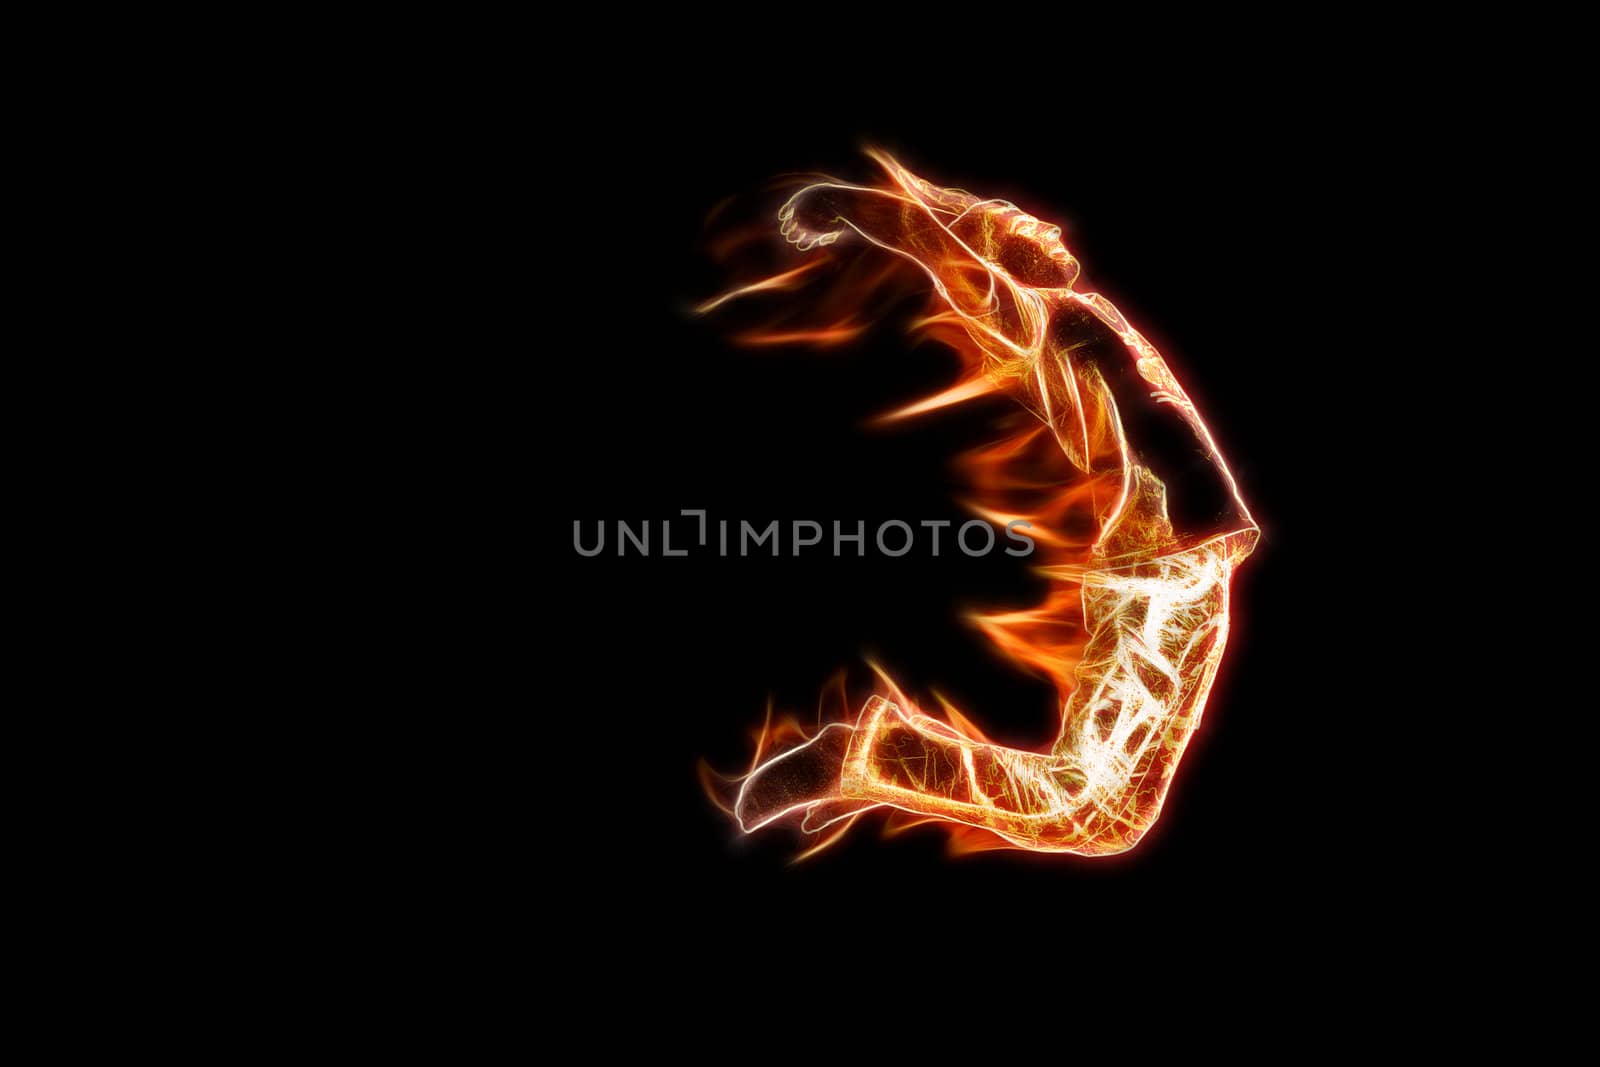 man in flames frozen in mid-air